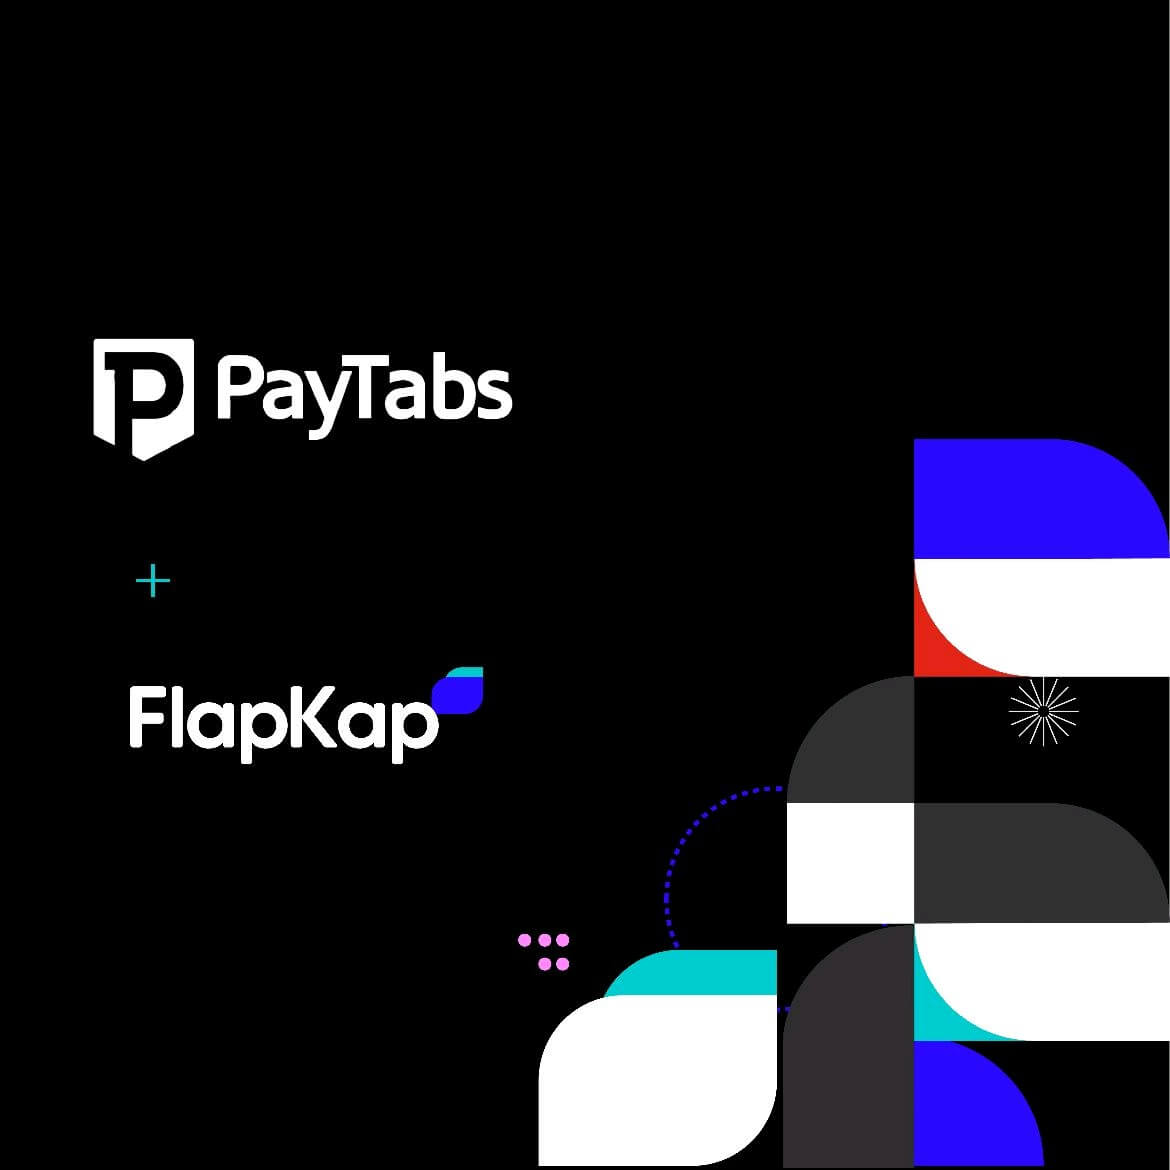 Partnership Between PayTabs and FlapKap